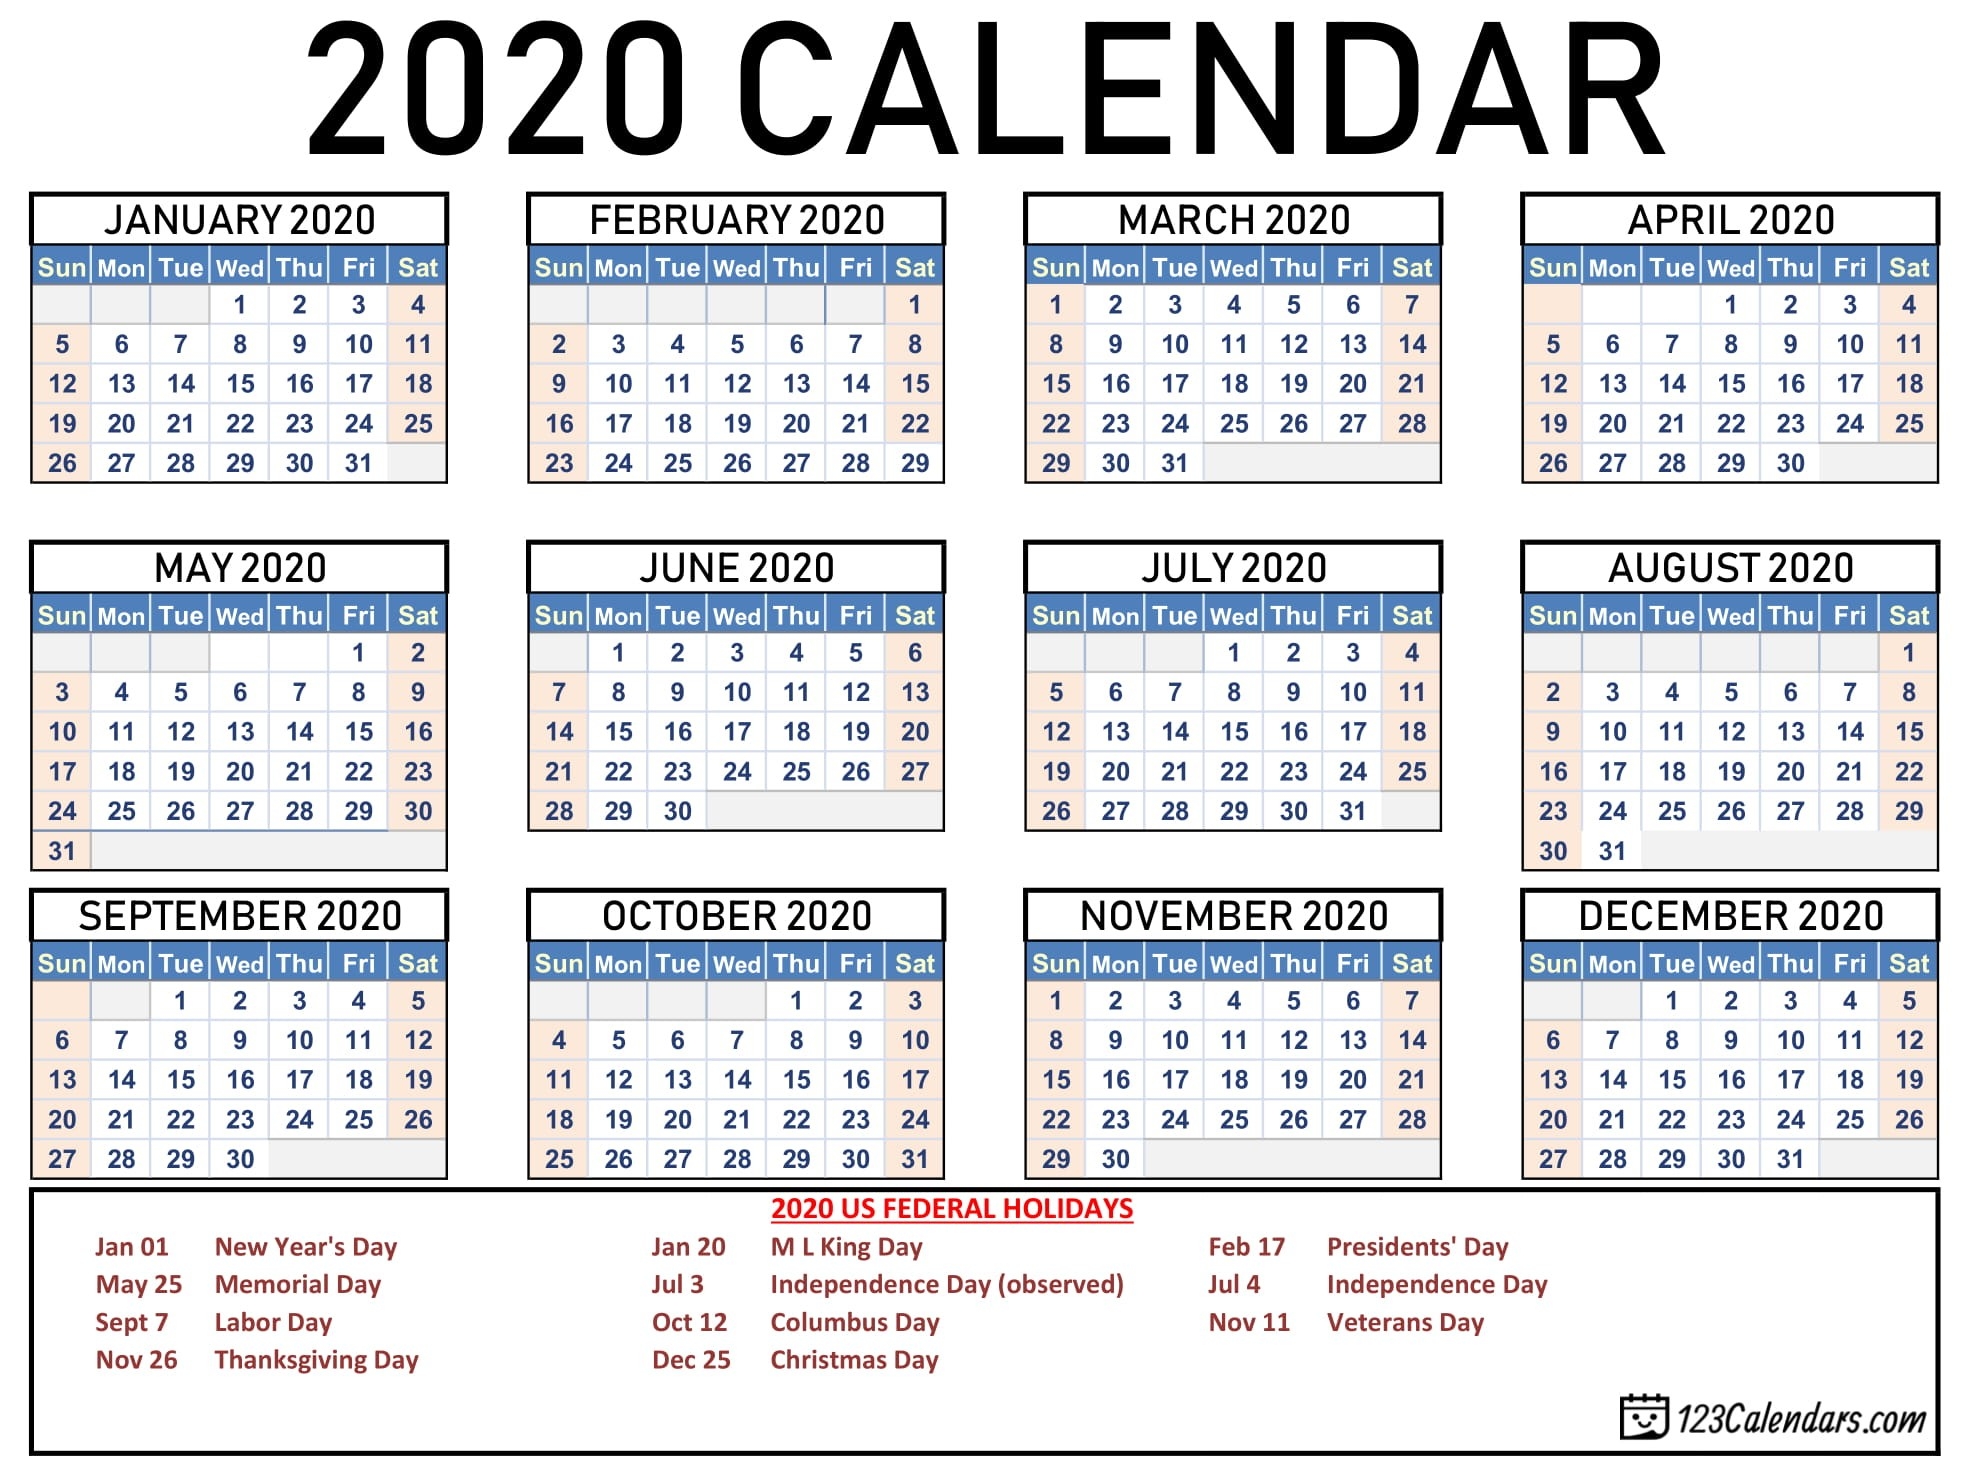 Free Printable Year 2020 Calendar | 123Calendars-Printable 2020 Calendar Showing Holidays